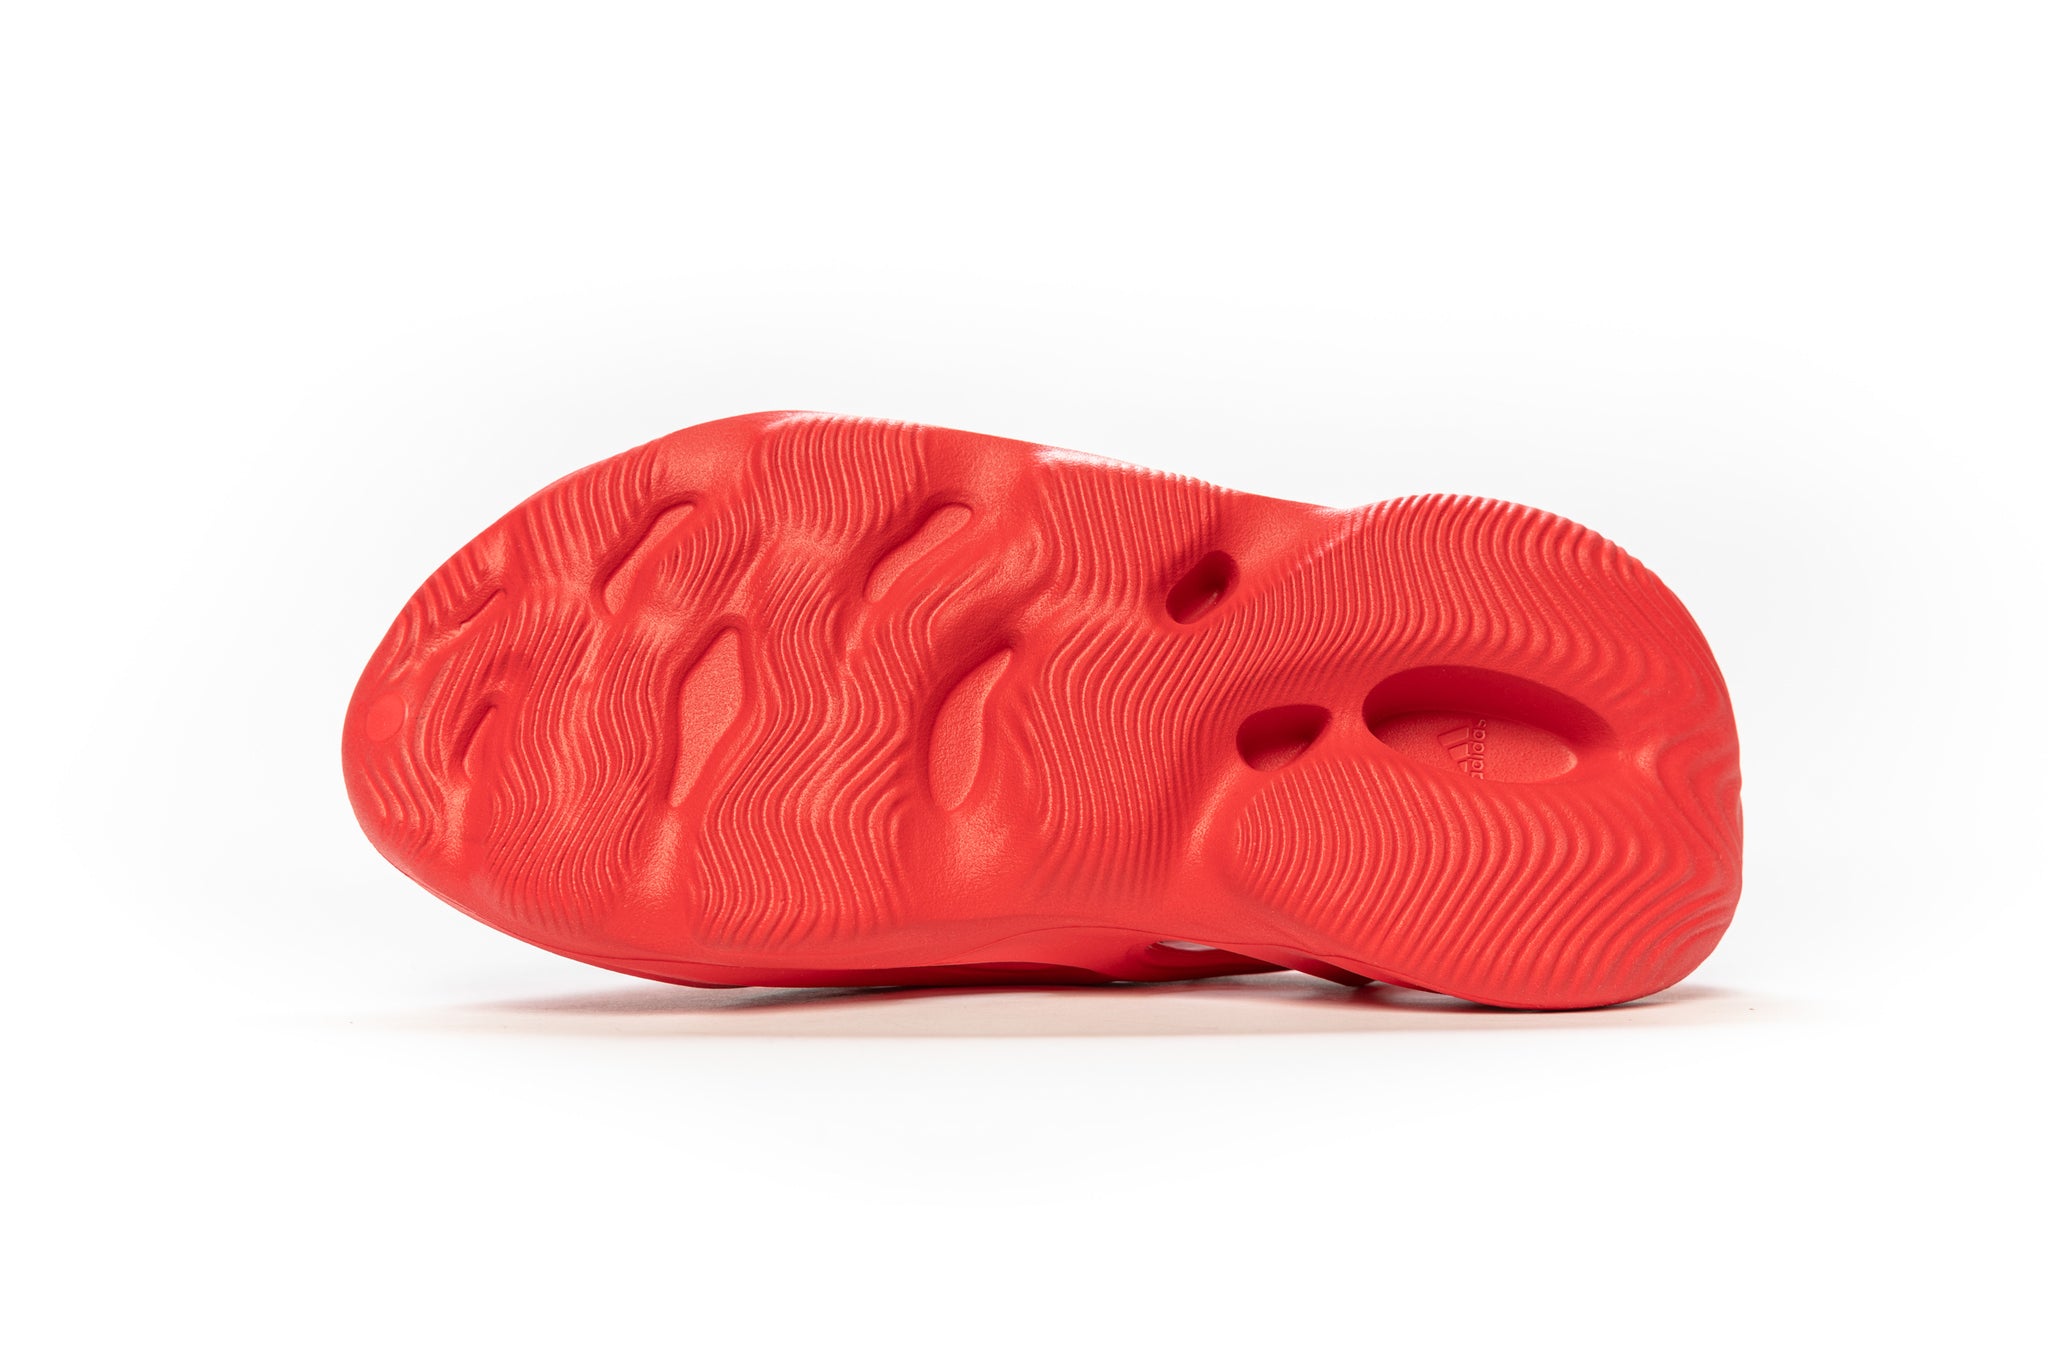 Adidas Yeezy Foam Runner Vermillioin Sneakers